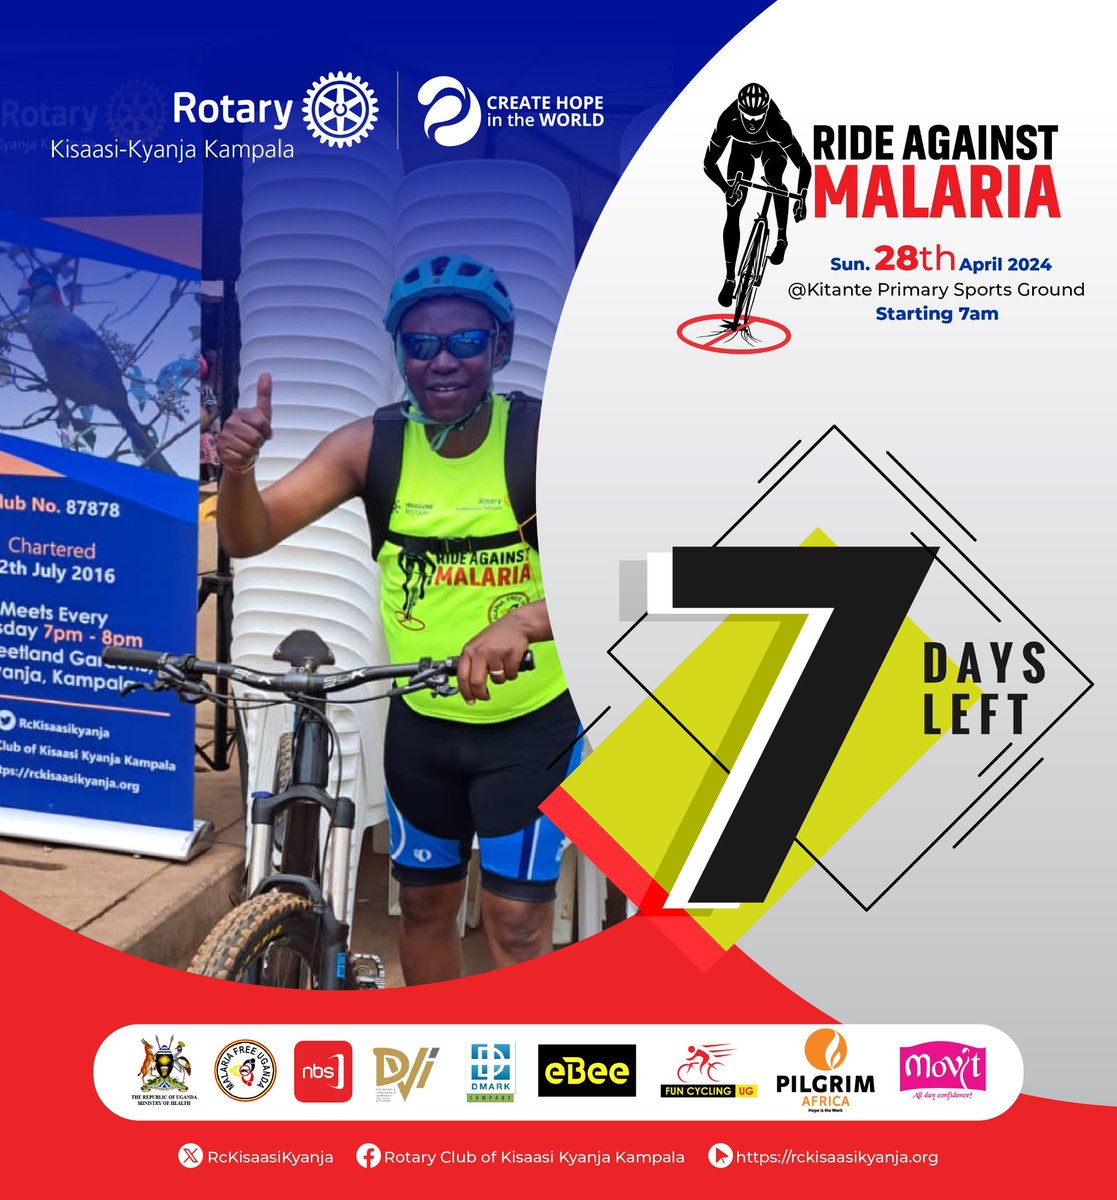 The countdown continues... Have you got your bike ready yet? @FunCyclingUg @InovoTec @nbstv @NBSportUg @Pamelanyaks @g_songa @MustaphaMugisa @MalariaFreeUG30 @firmie83 @Pfyonar @LuwembaStuart @rotaryd9213 @MinofHealthUG @CEPilgrimAfrica @NatukundaMario